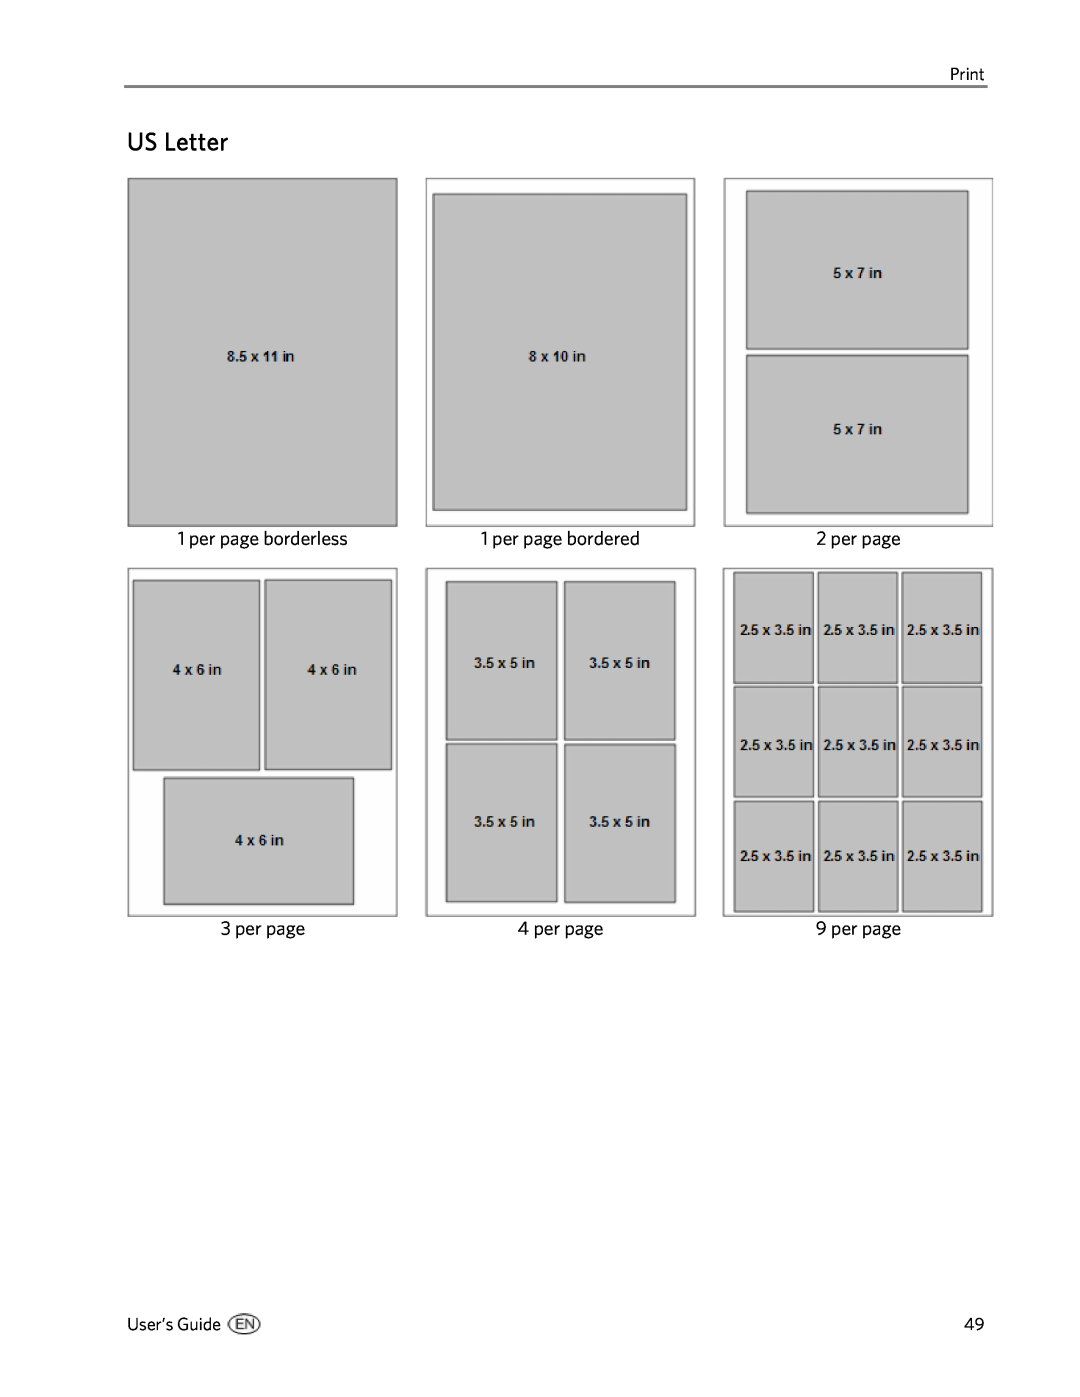 Kodak 5500 manual US Letter, Print, per page, User’s Guide 